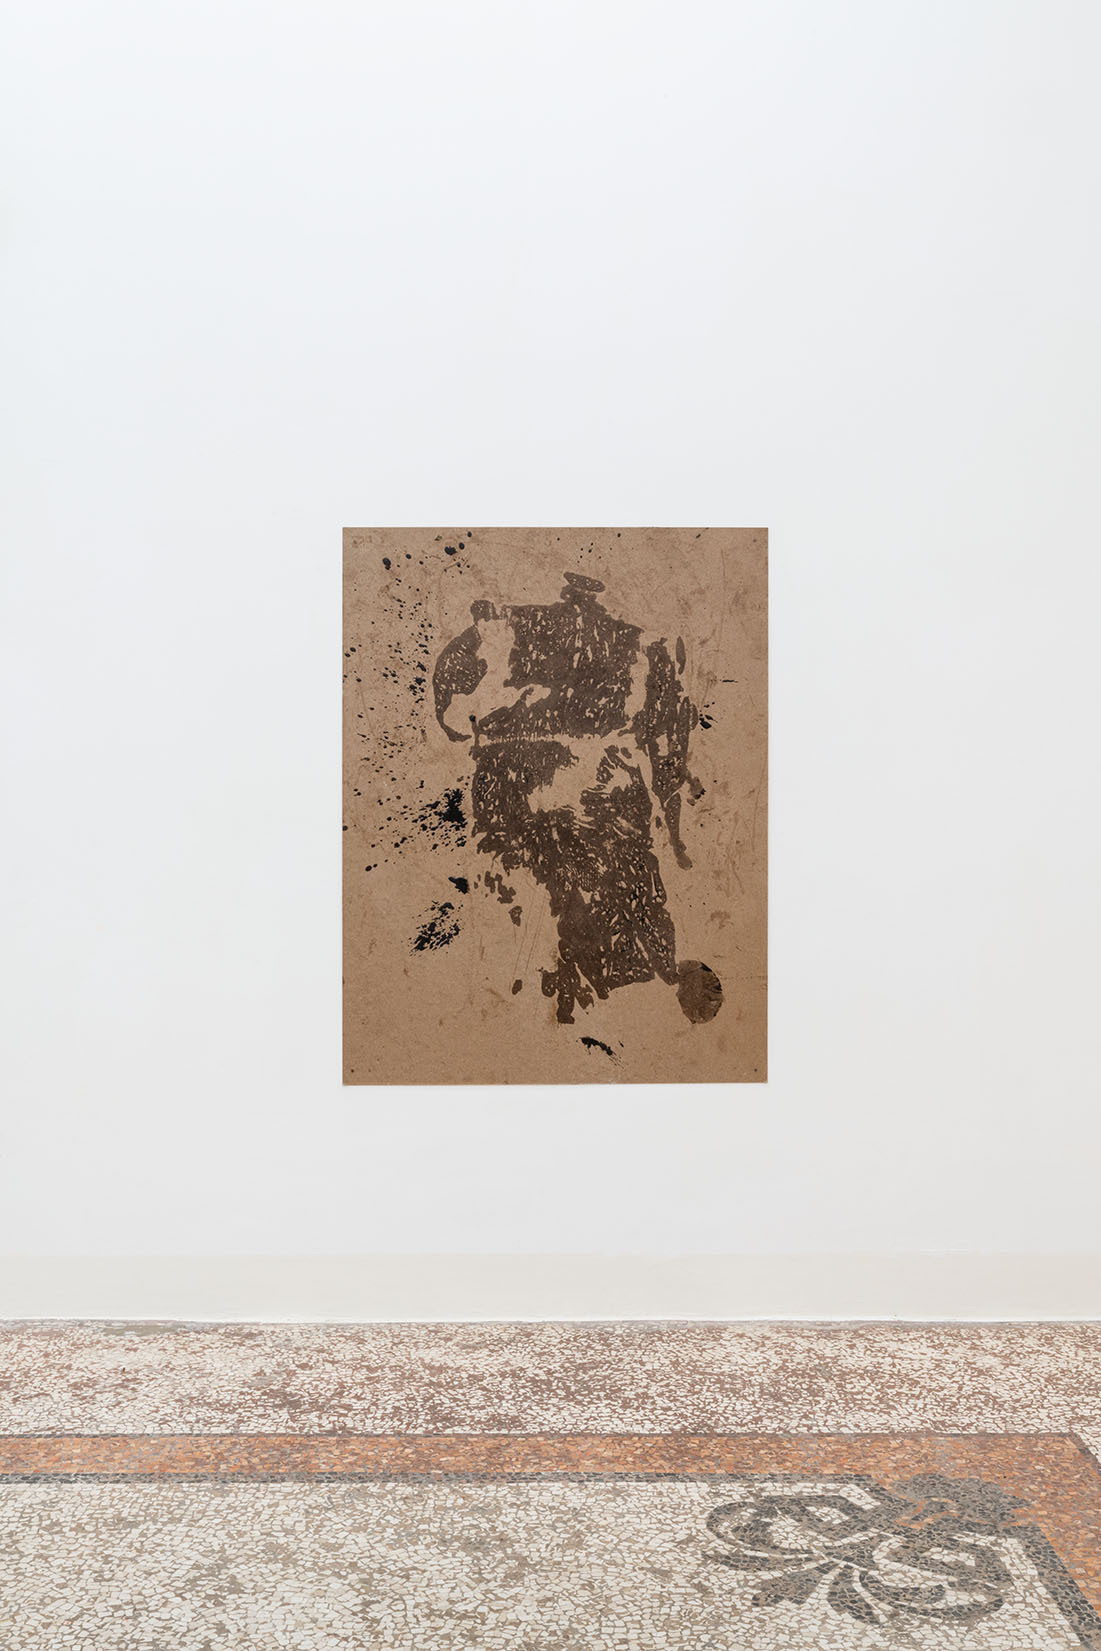 Bri Williams, Relief, 2021, Wax on board, 137 x 105 cm